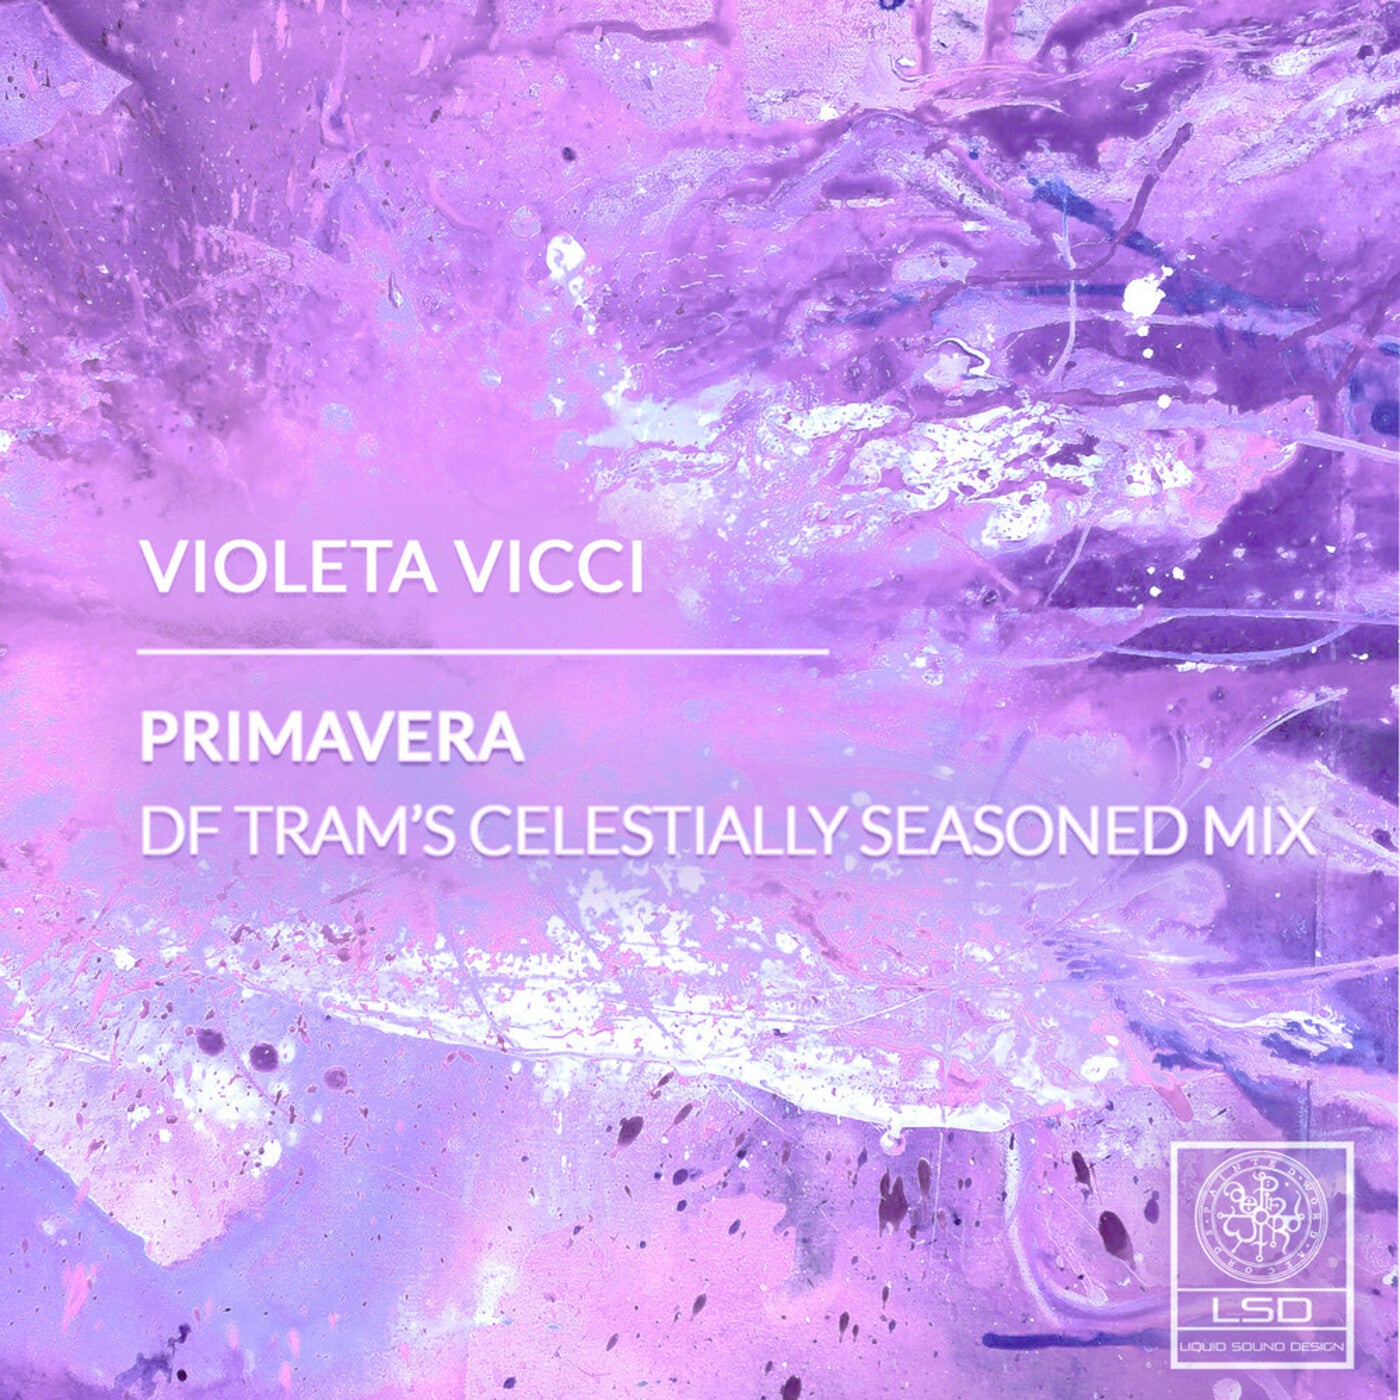 Primavera (DF Tram's Celestially Seasoned Mix)